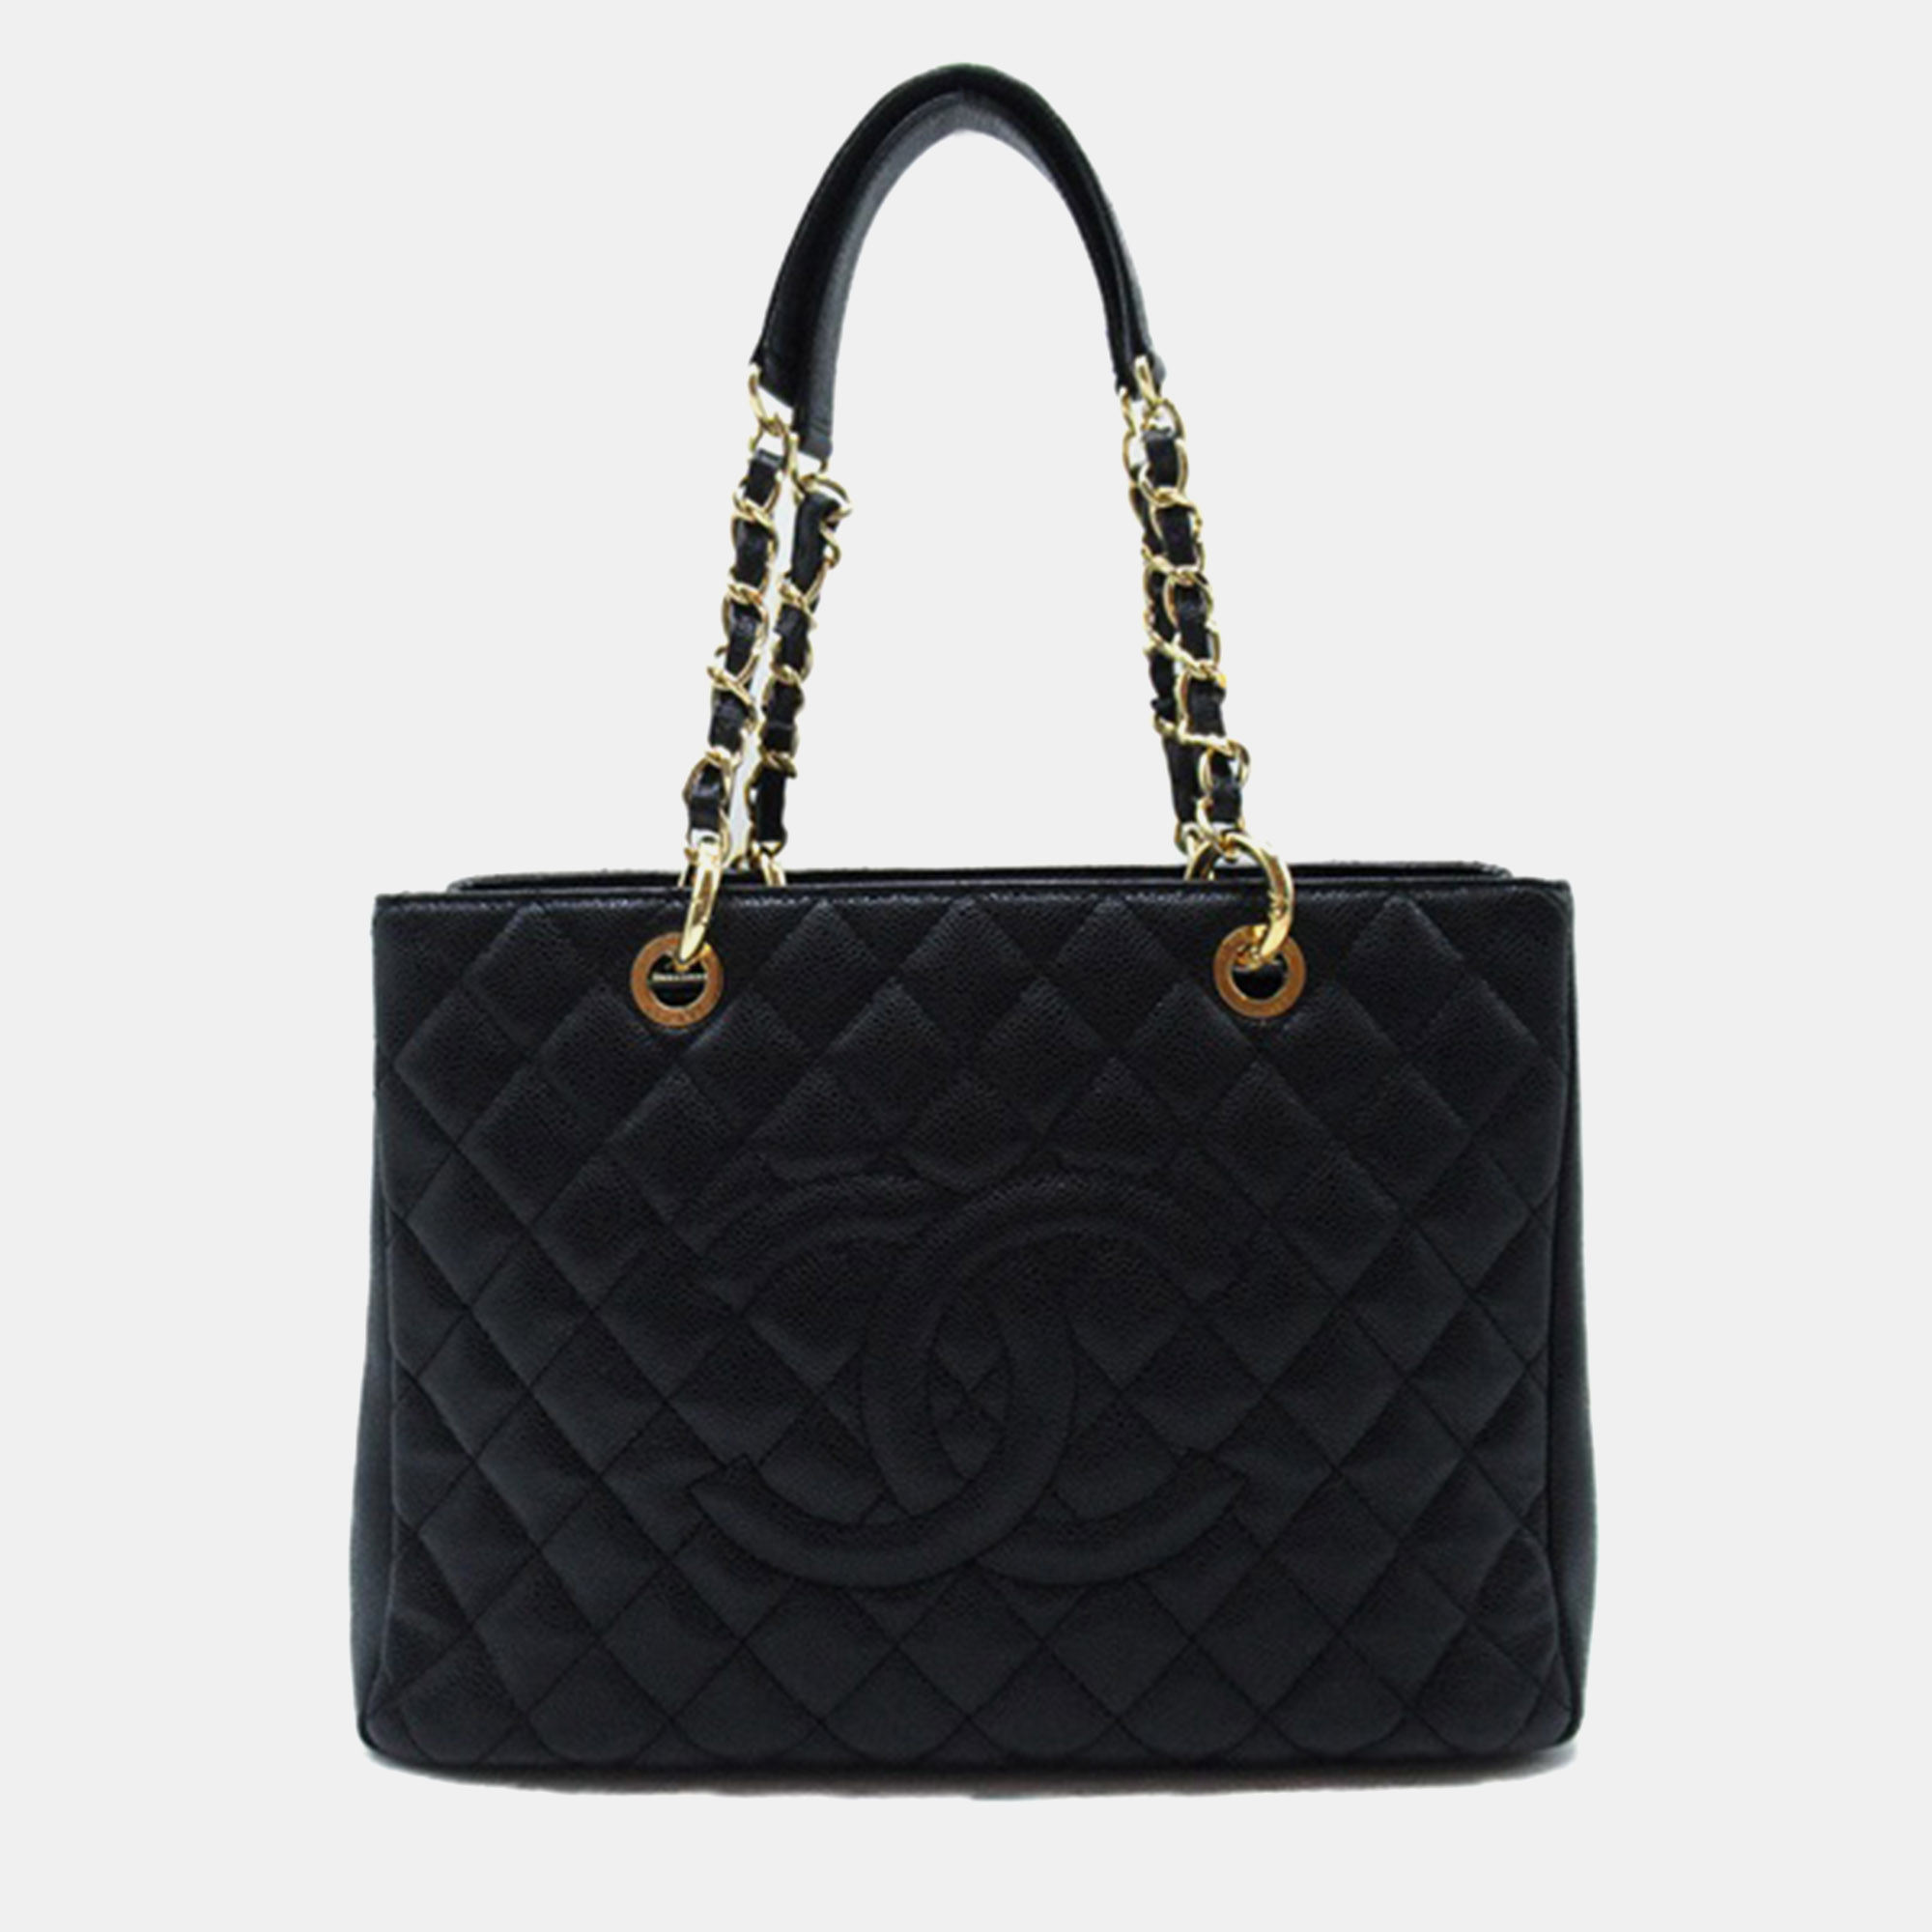 Chanel black cc caviar leather grand shopping tote bag